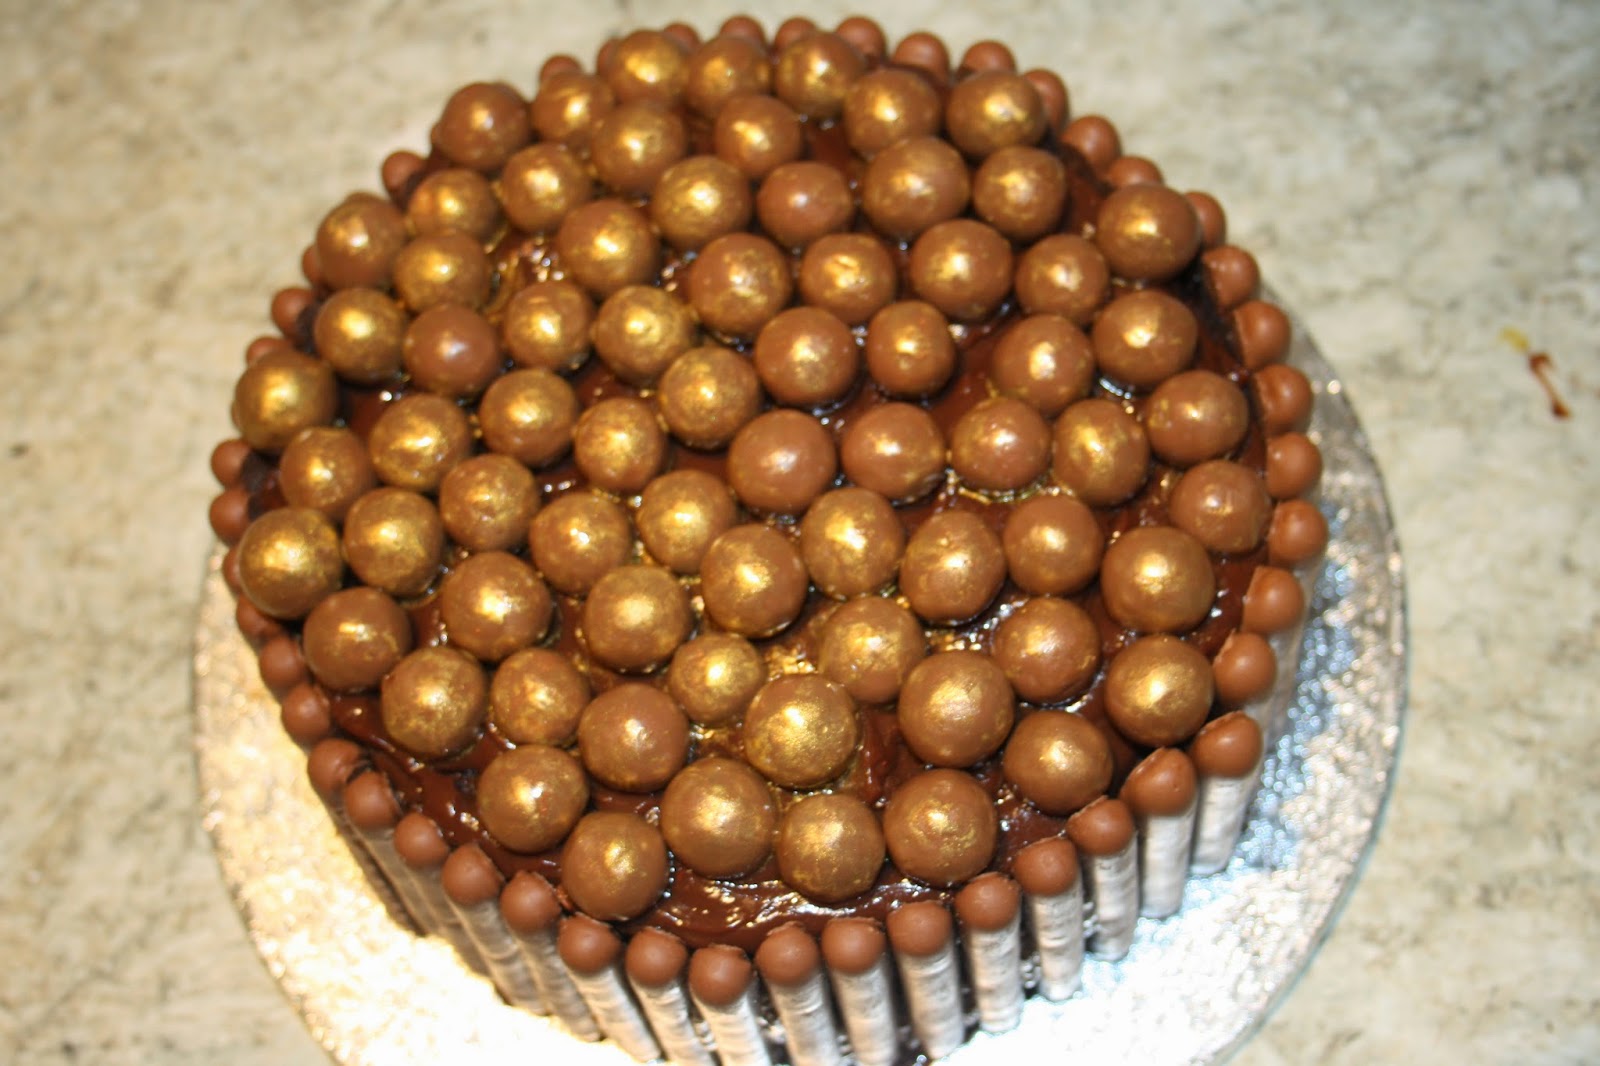 chocolate malteser cake